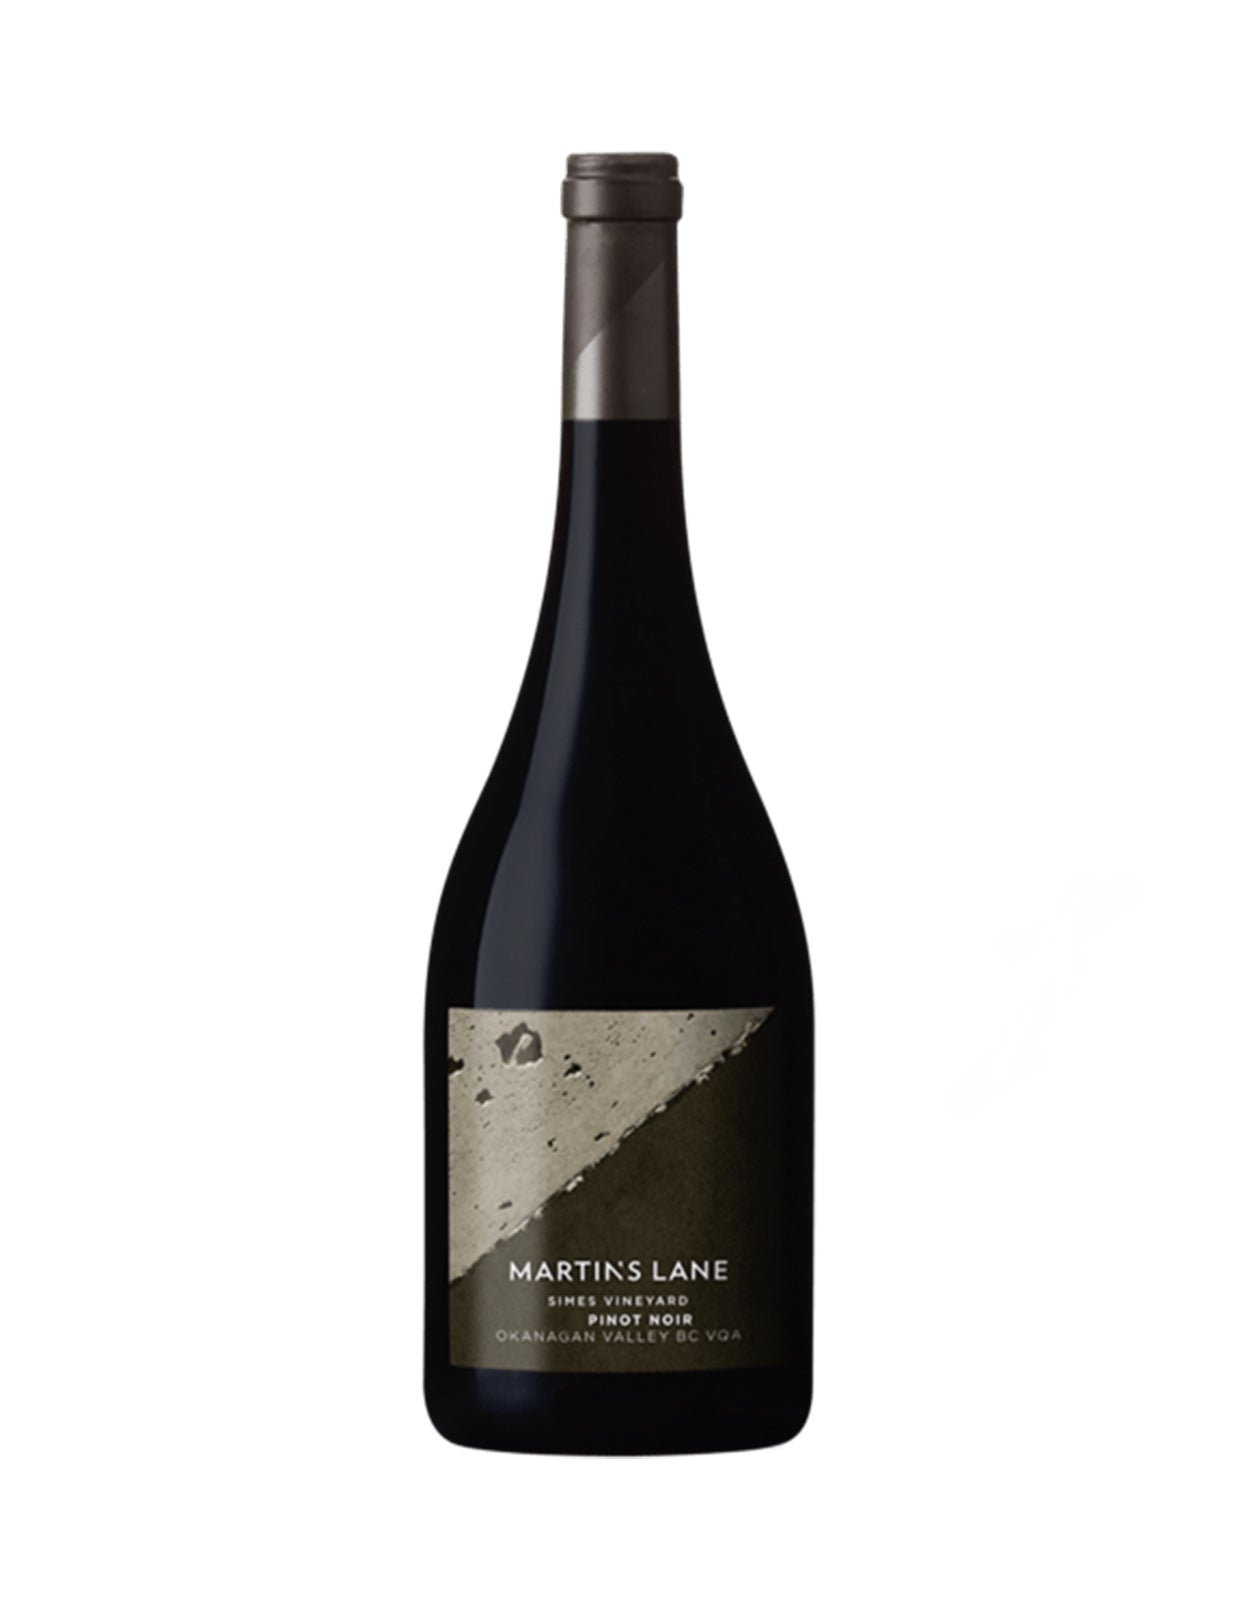 Martin's Lane Pinot Noir 'Simes Vineyard' 2019